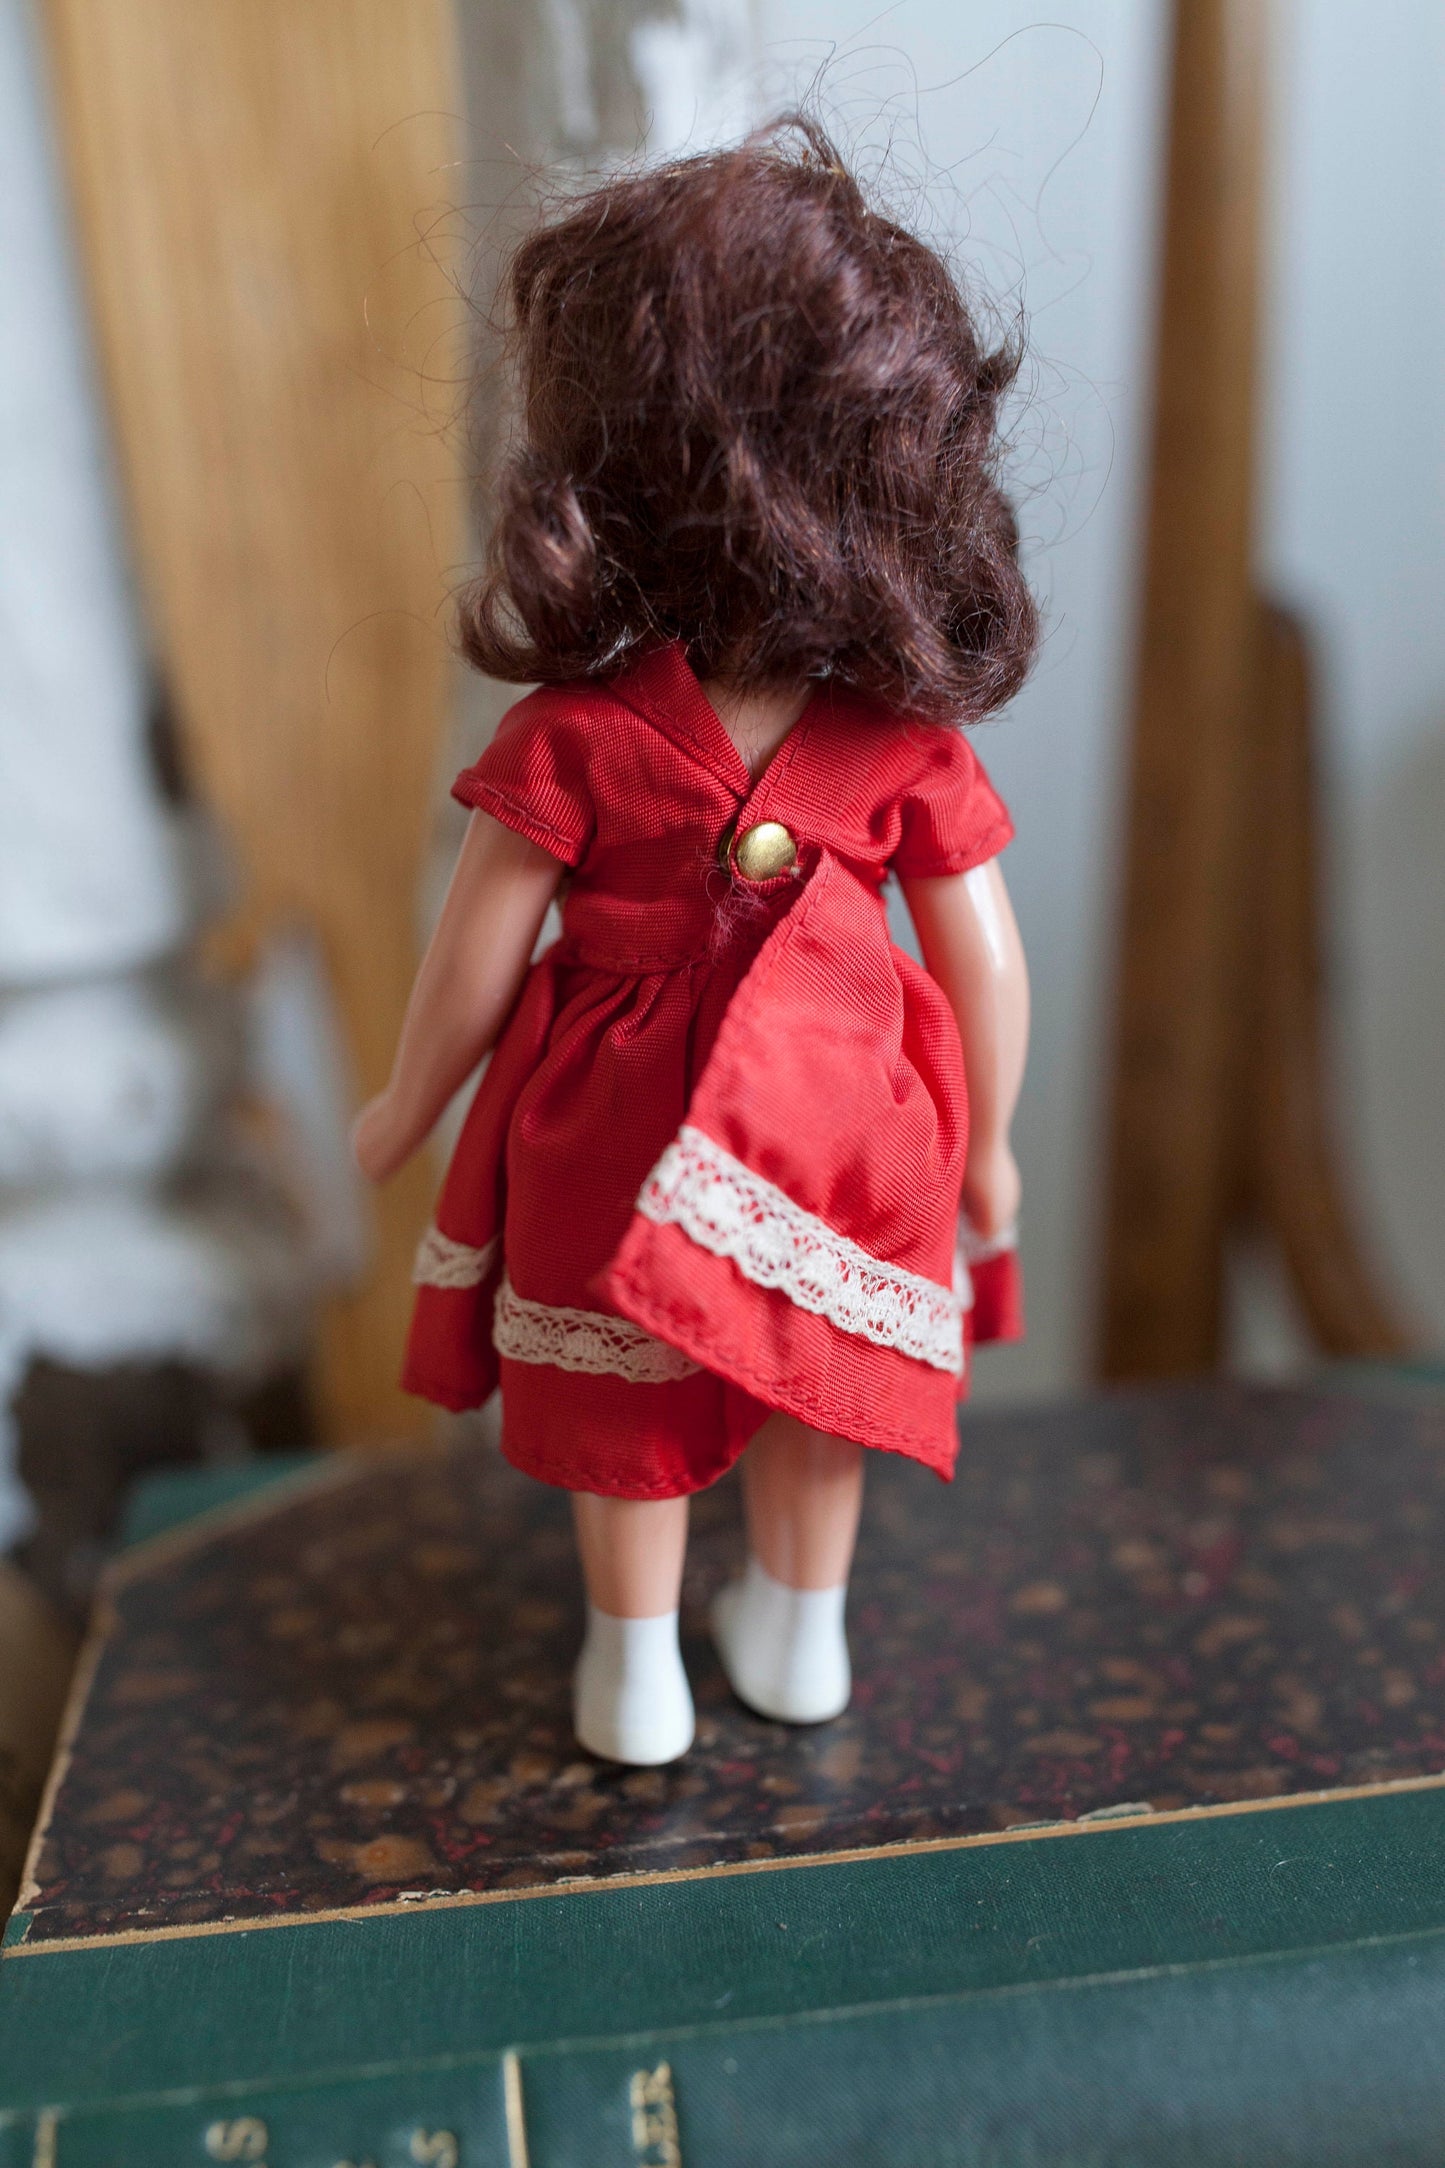 Vintage Story Book Dolls Plastic with Sleepy Eyes